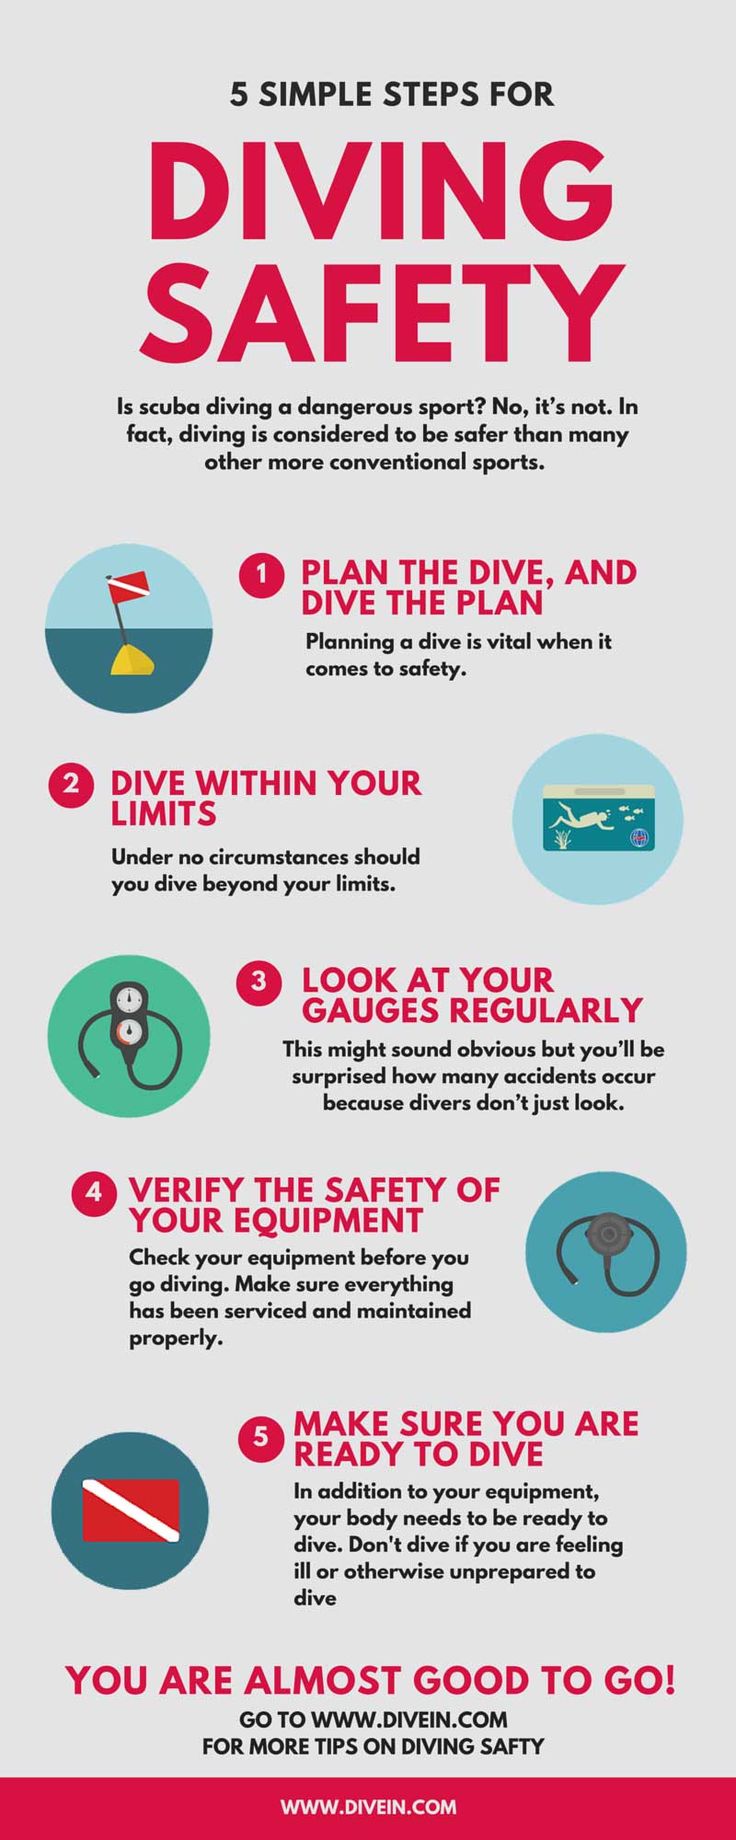 scuba diving instruction manual